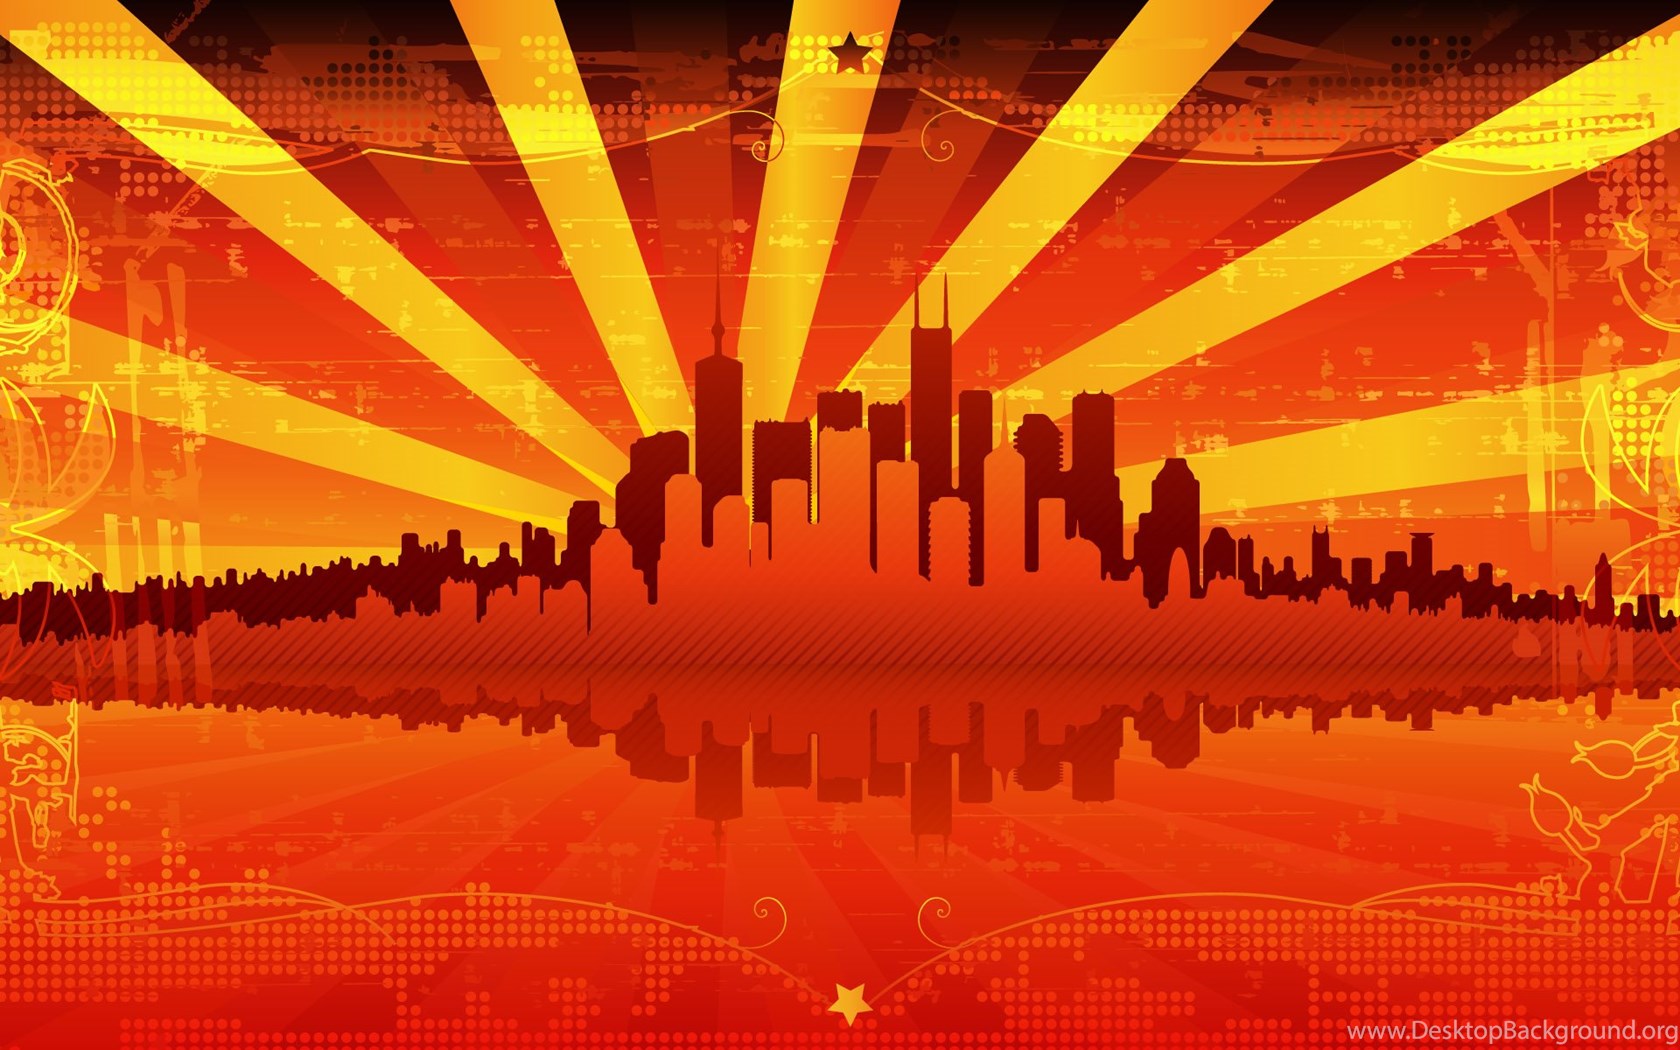 Download Red Fire City Wallpaper Images 44 Popular 1680x1050 Desktop Backgr...